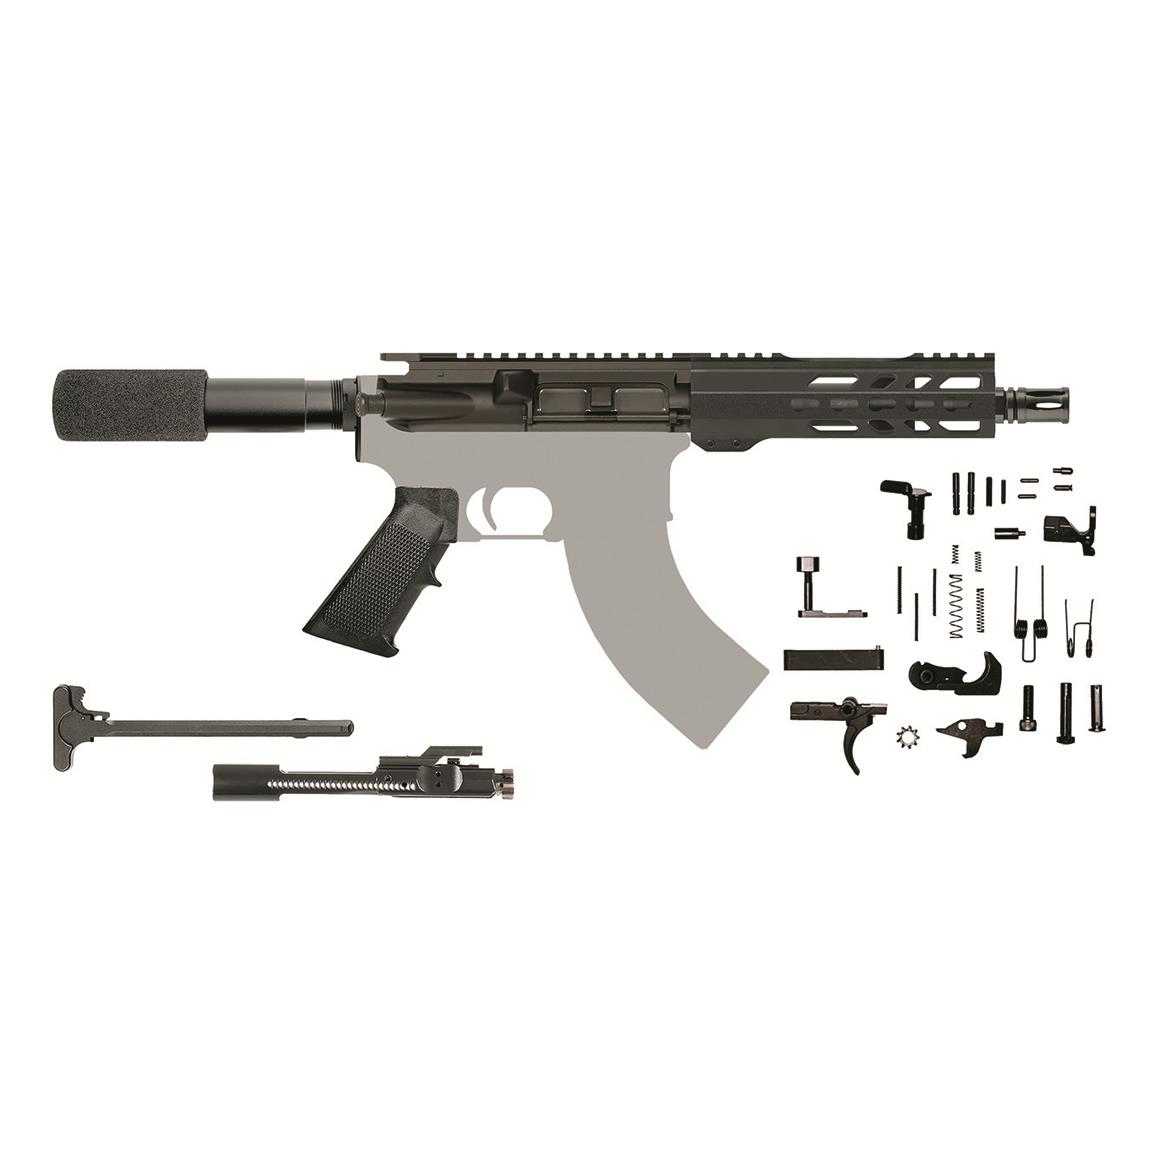 CBC AR-15 Pistol Kit, Semi-auto, 7.62x39mm, 7.5" Barrel, KeyMod, No Stripped Lower or Magazine